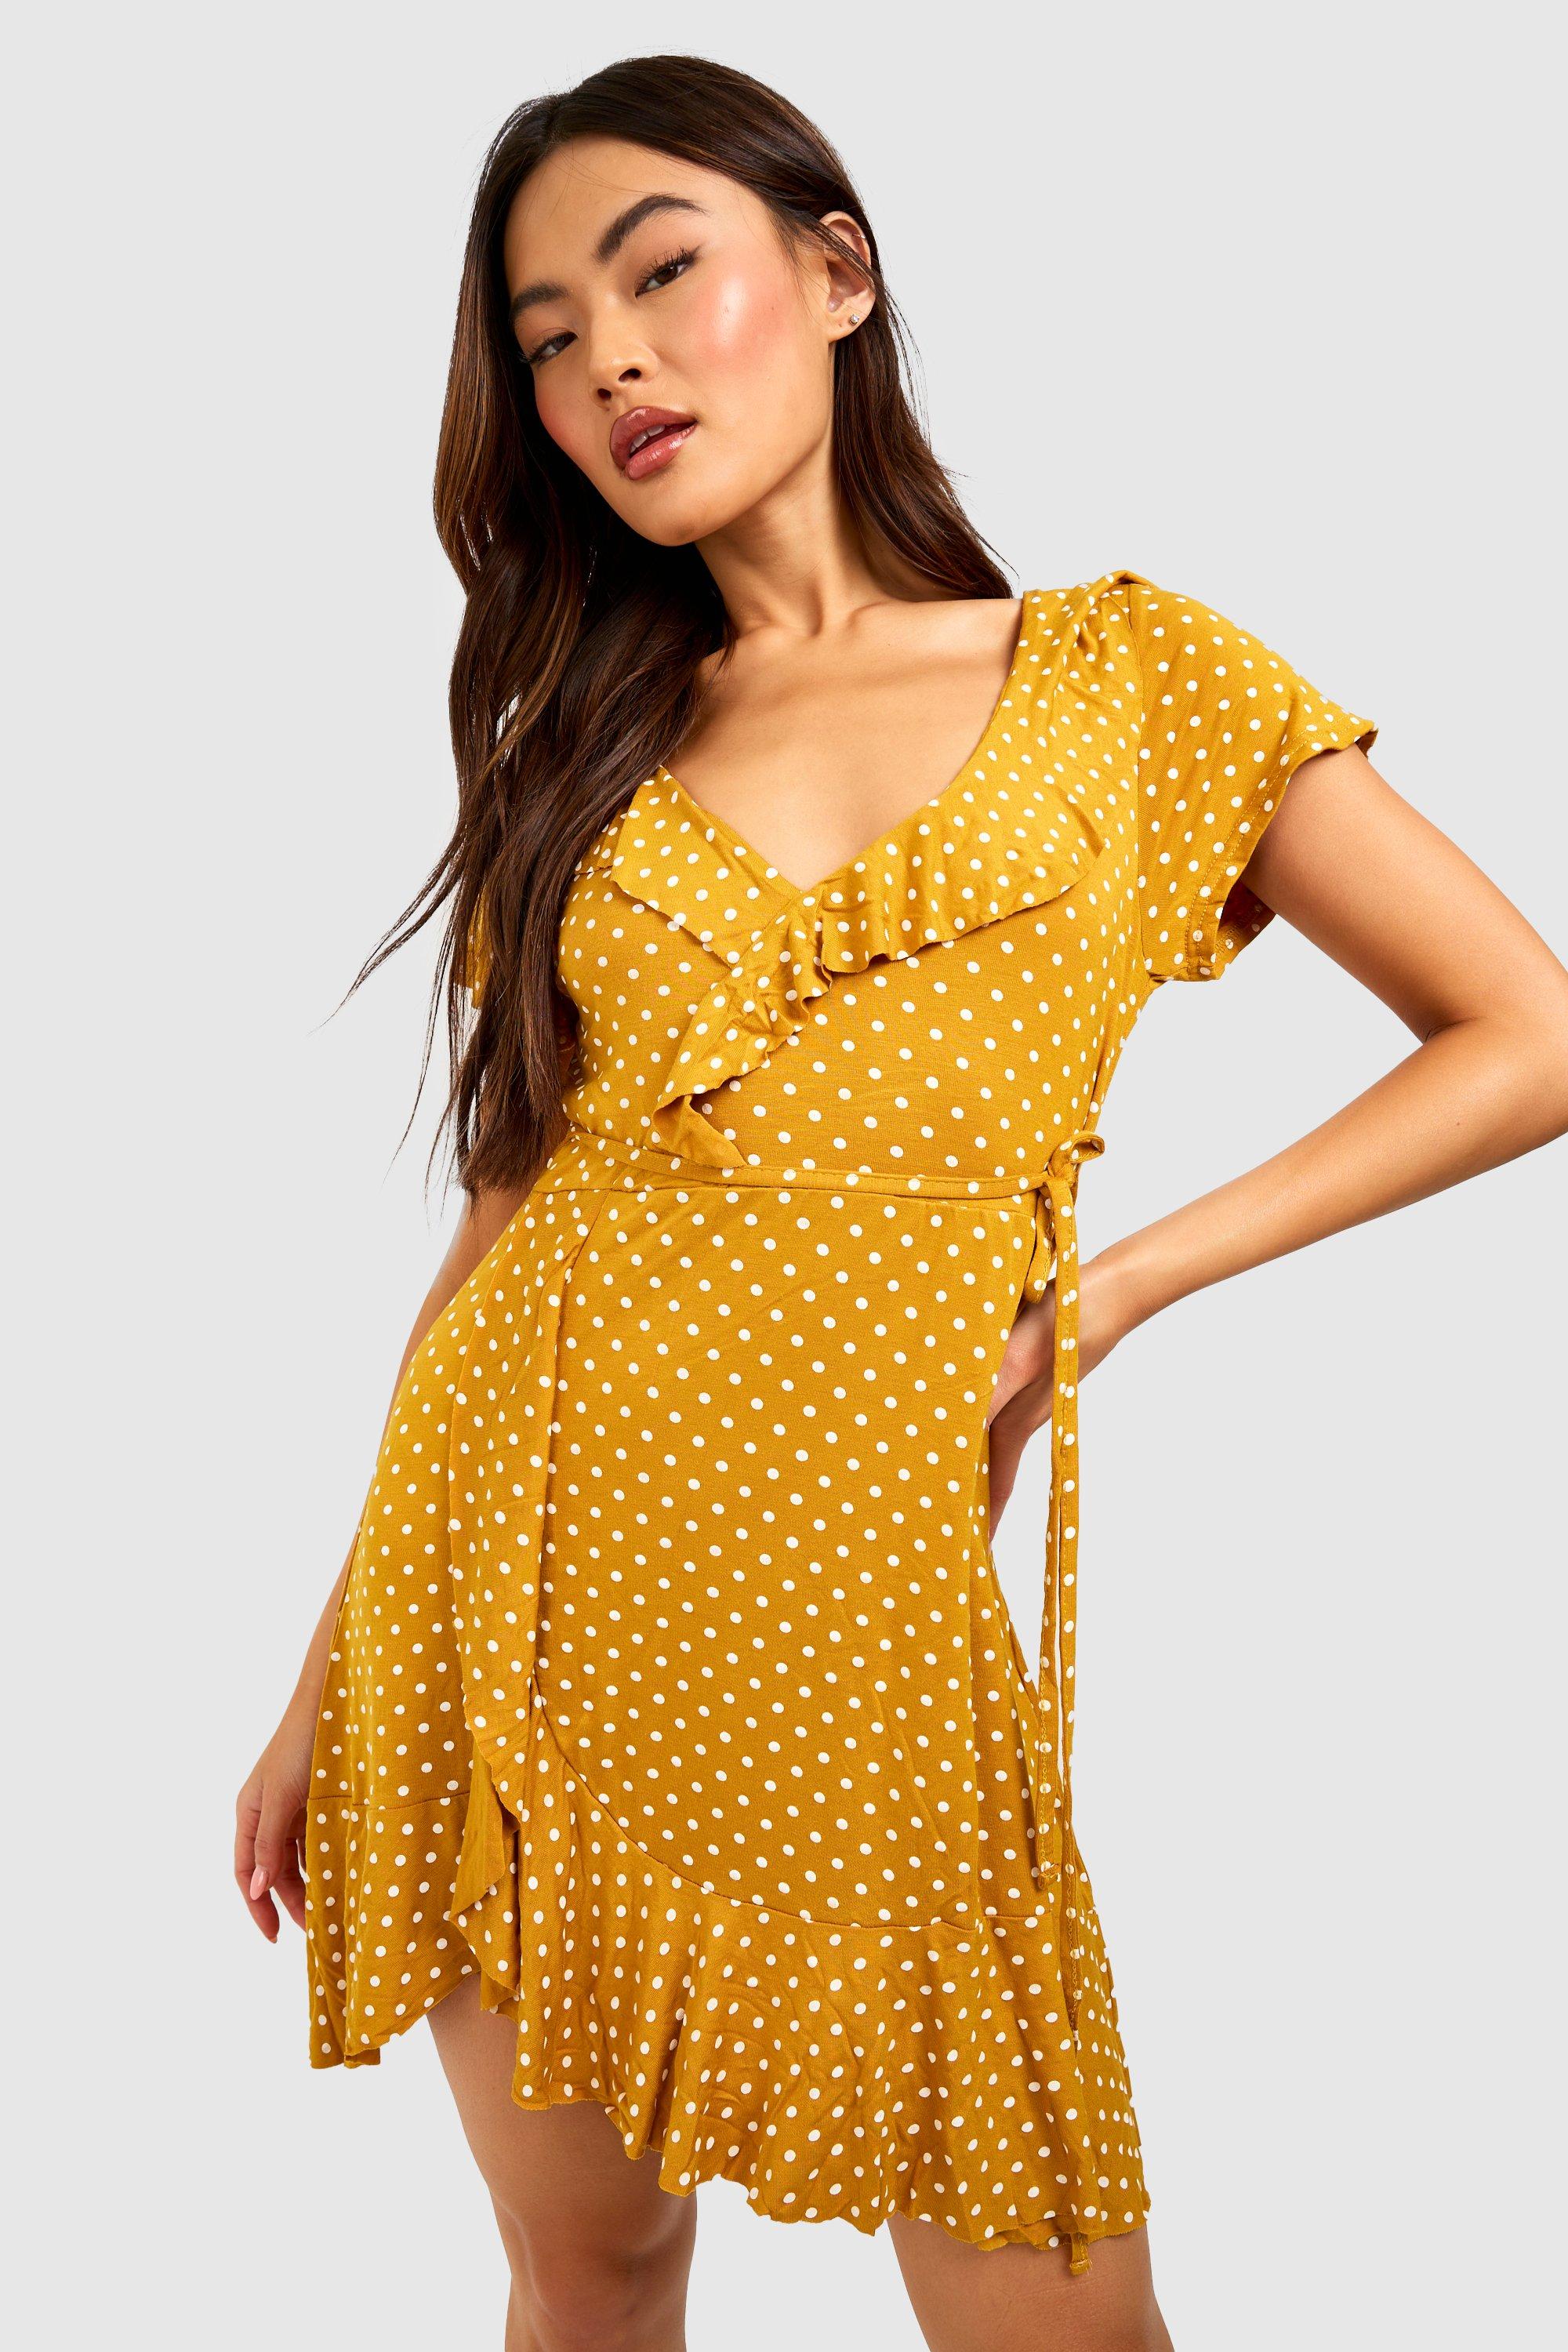 boohoo mustard dress